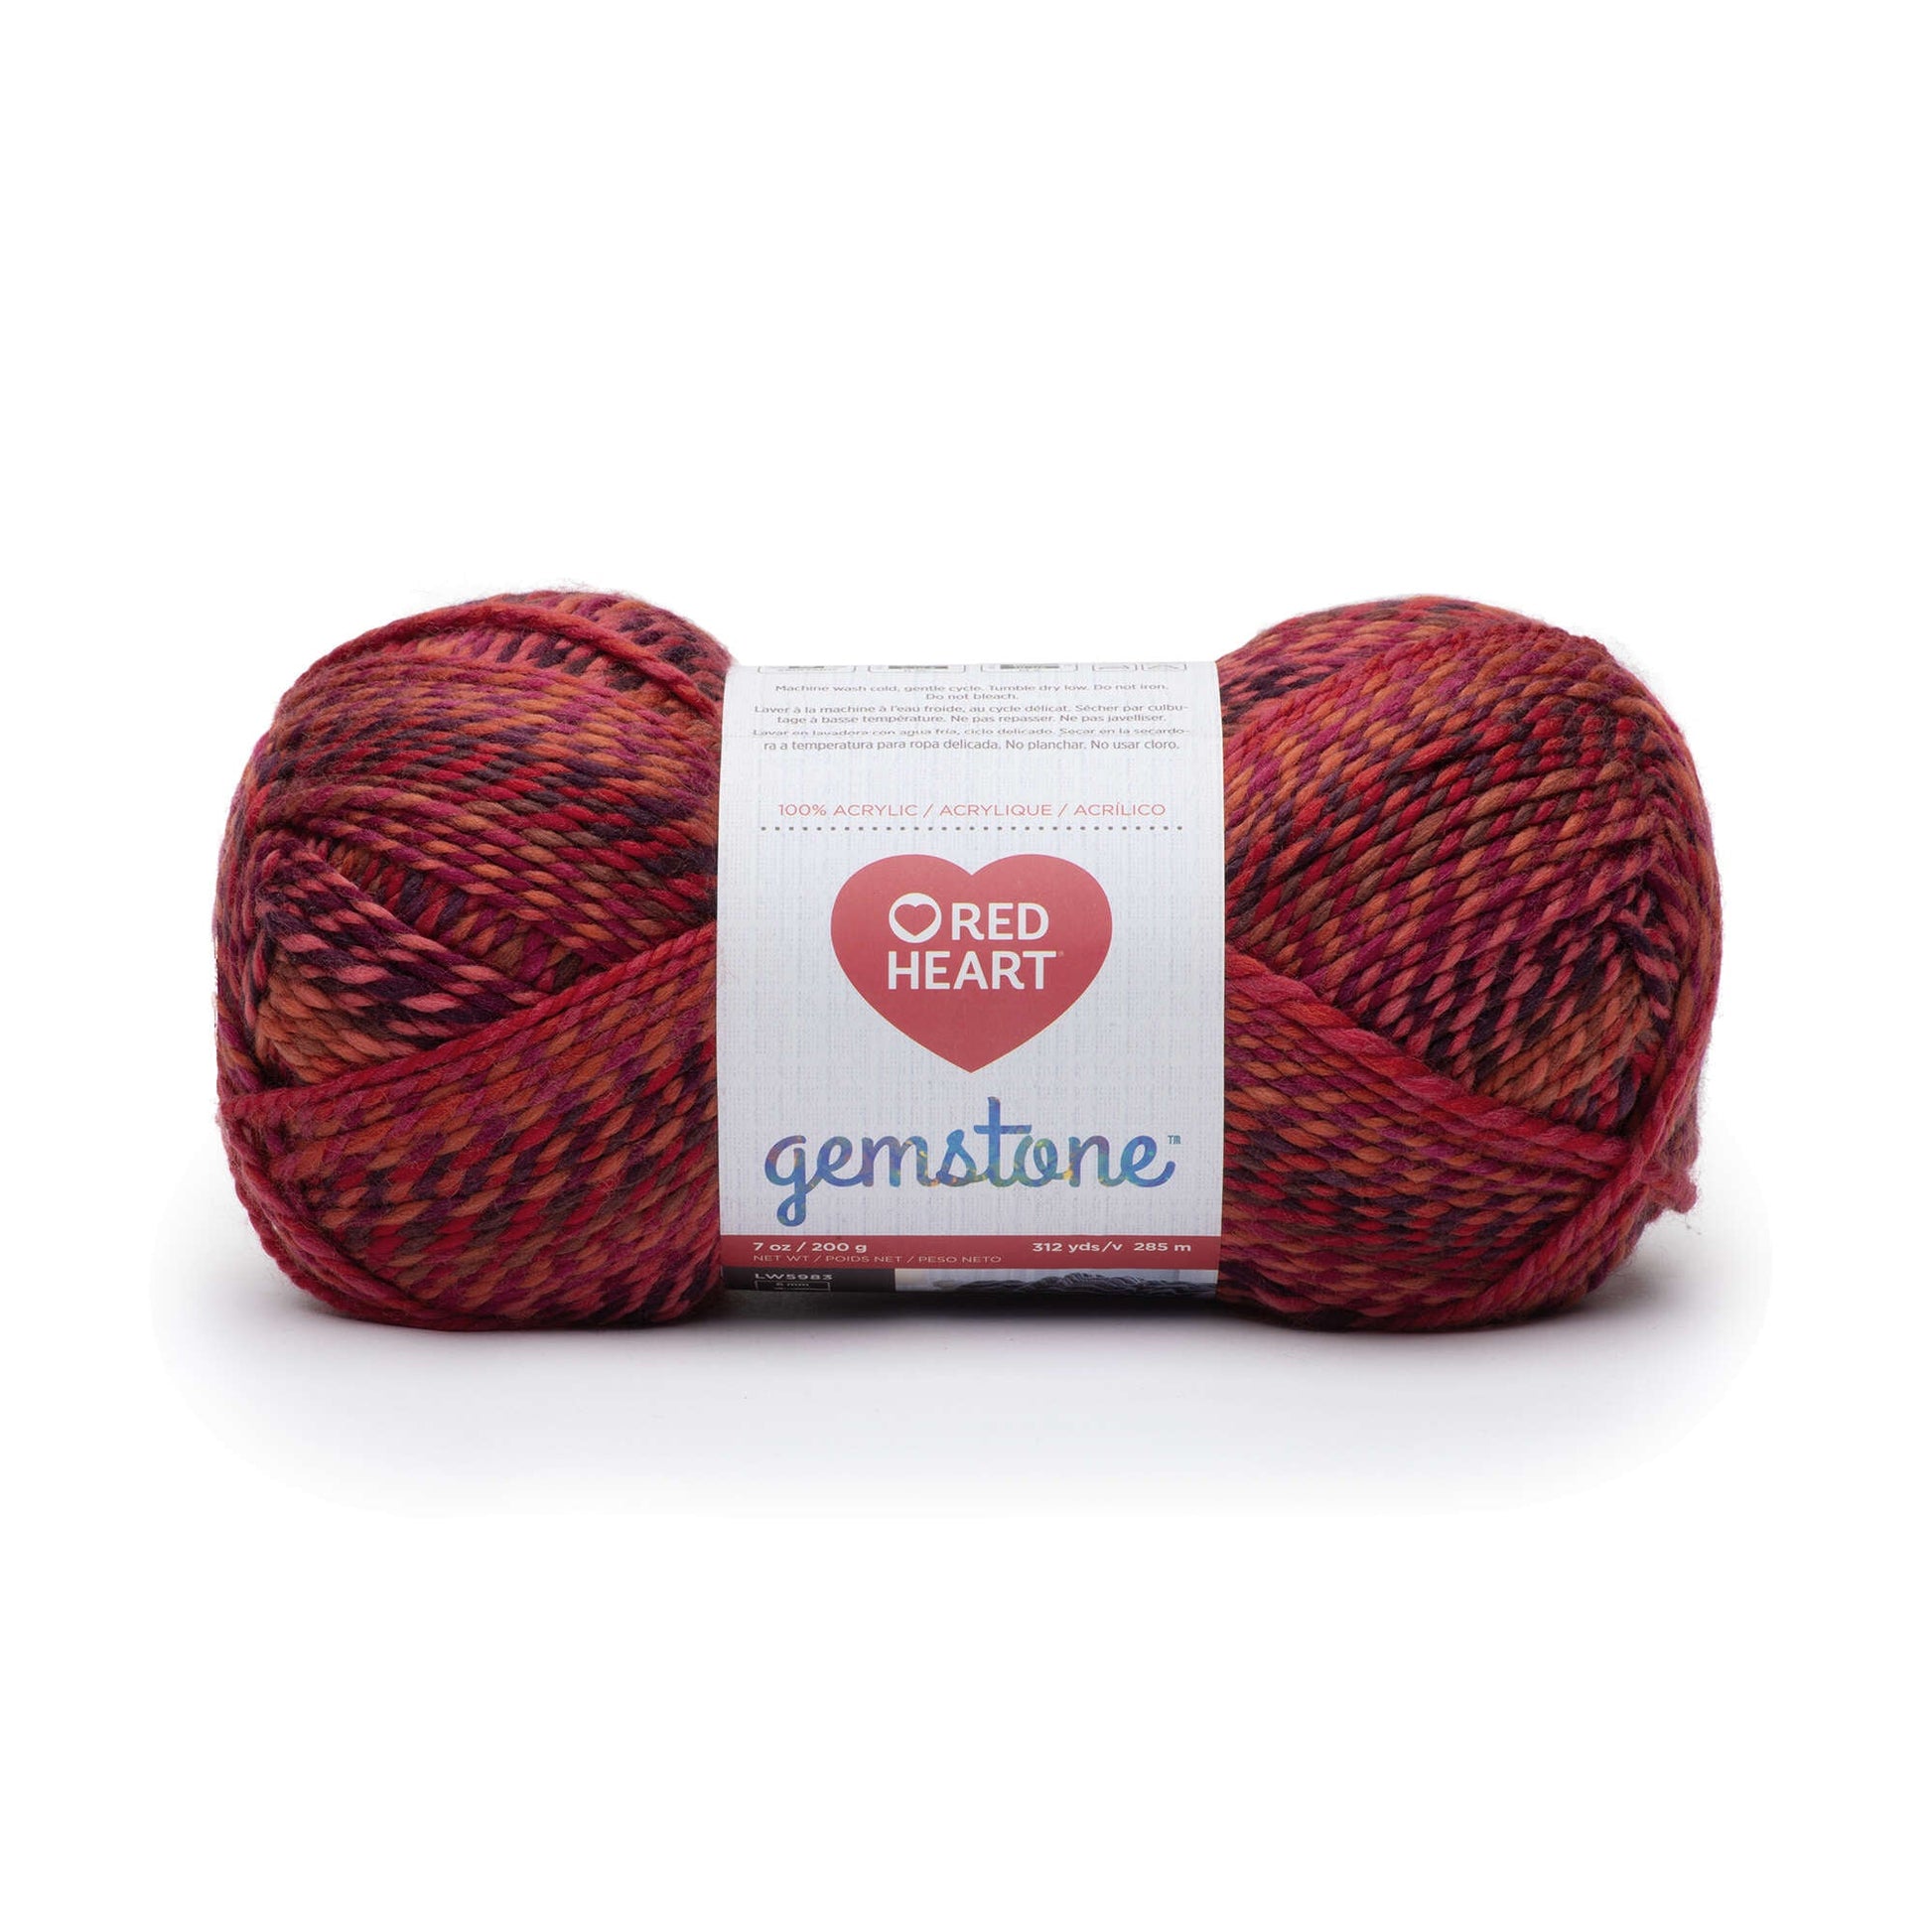 Red Heart Gemstone Yarn - Discontinued shades